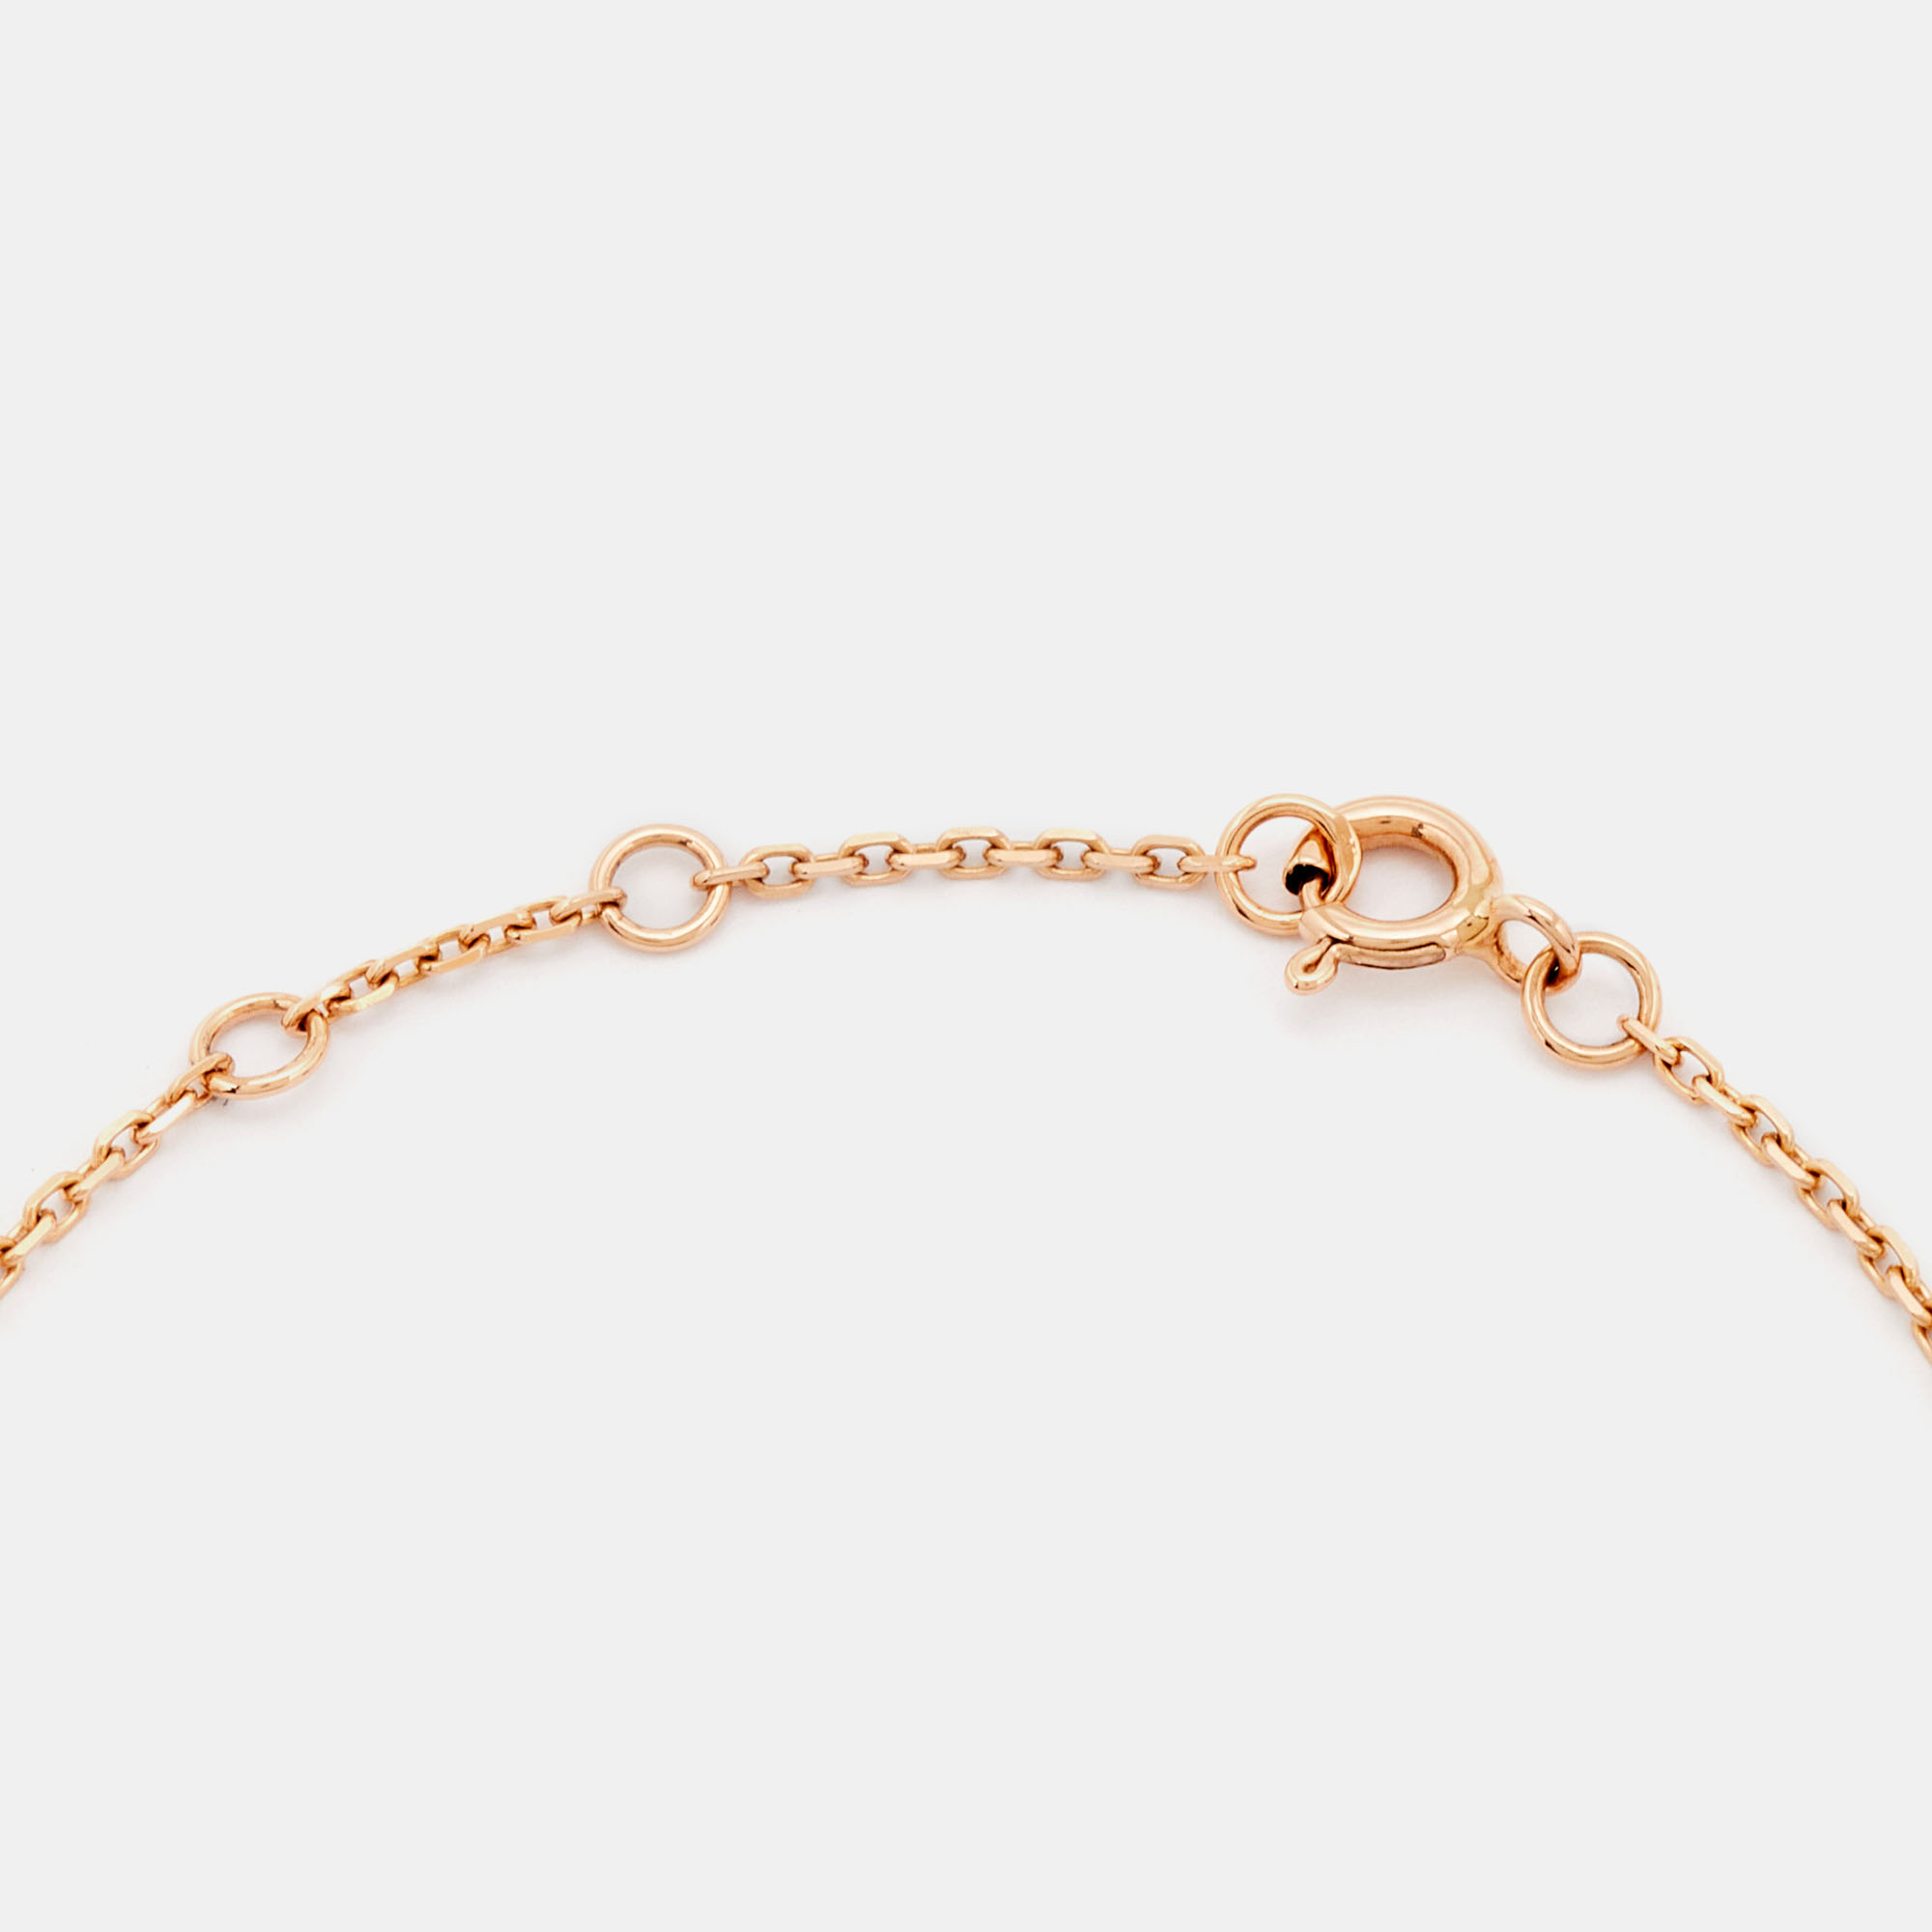 Louis Vuitton, Jewelry, Louis Vuitton Star Blossom Bracelet 8k Rose Gold  With Diamonds